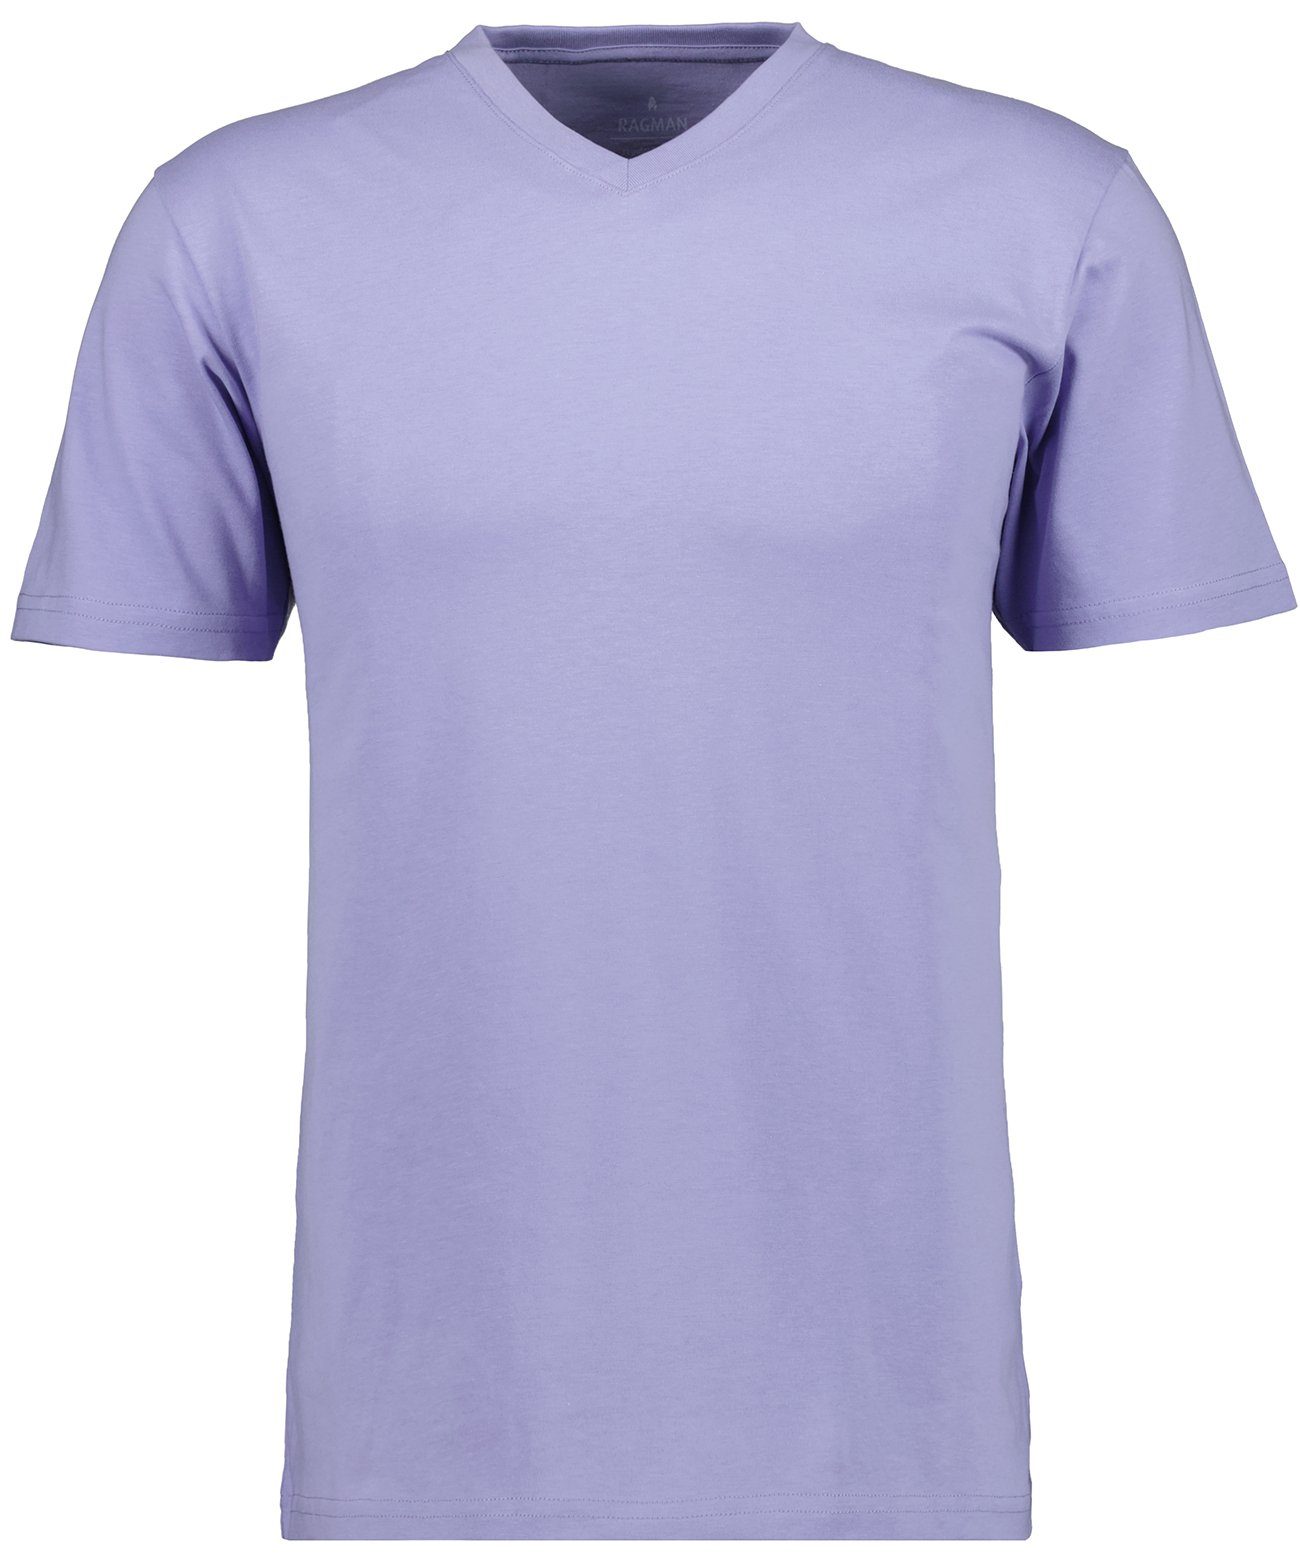 RAGMAN T-Shirt Violet-421